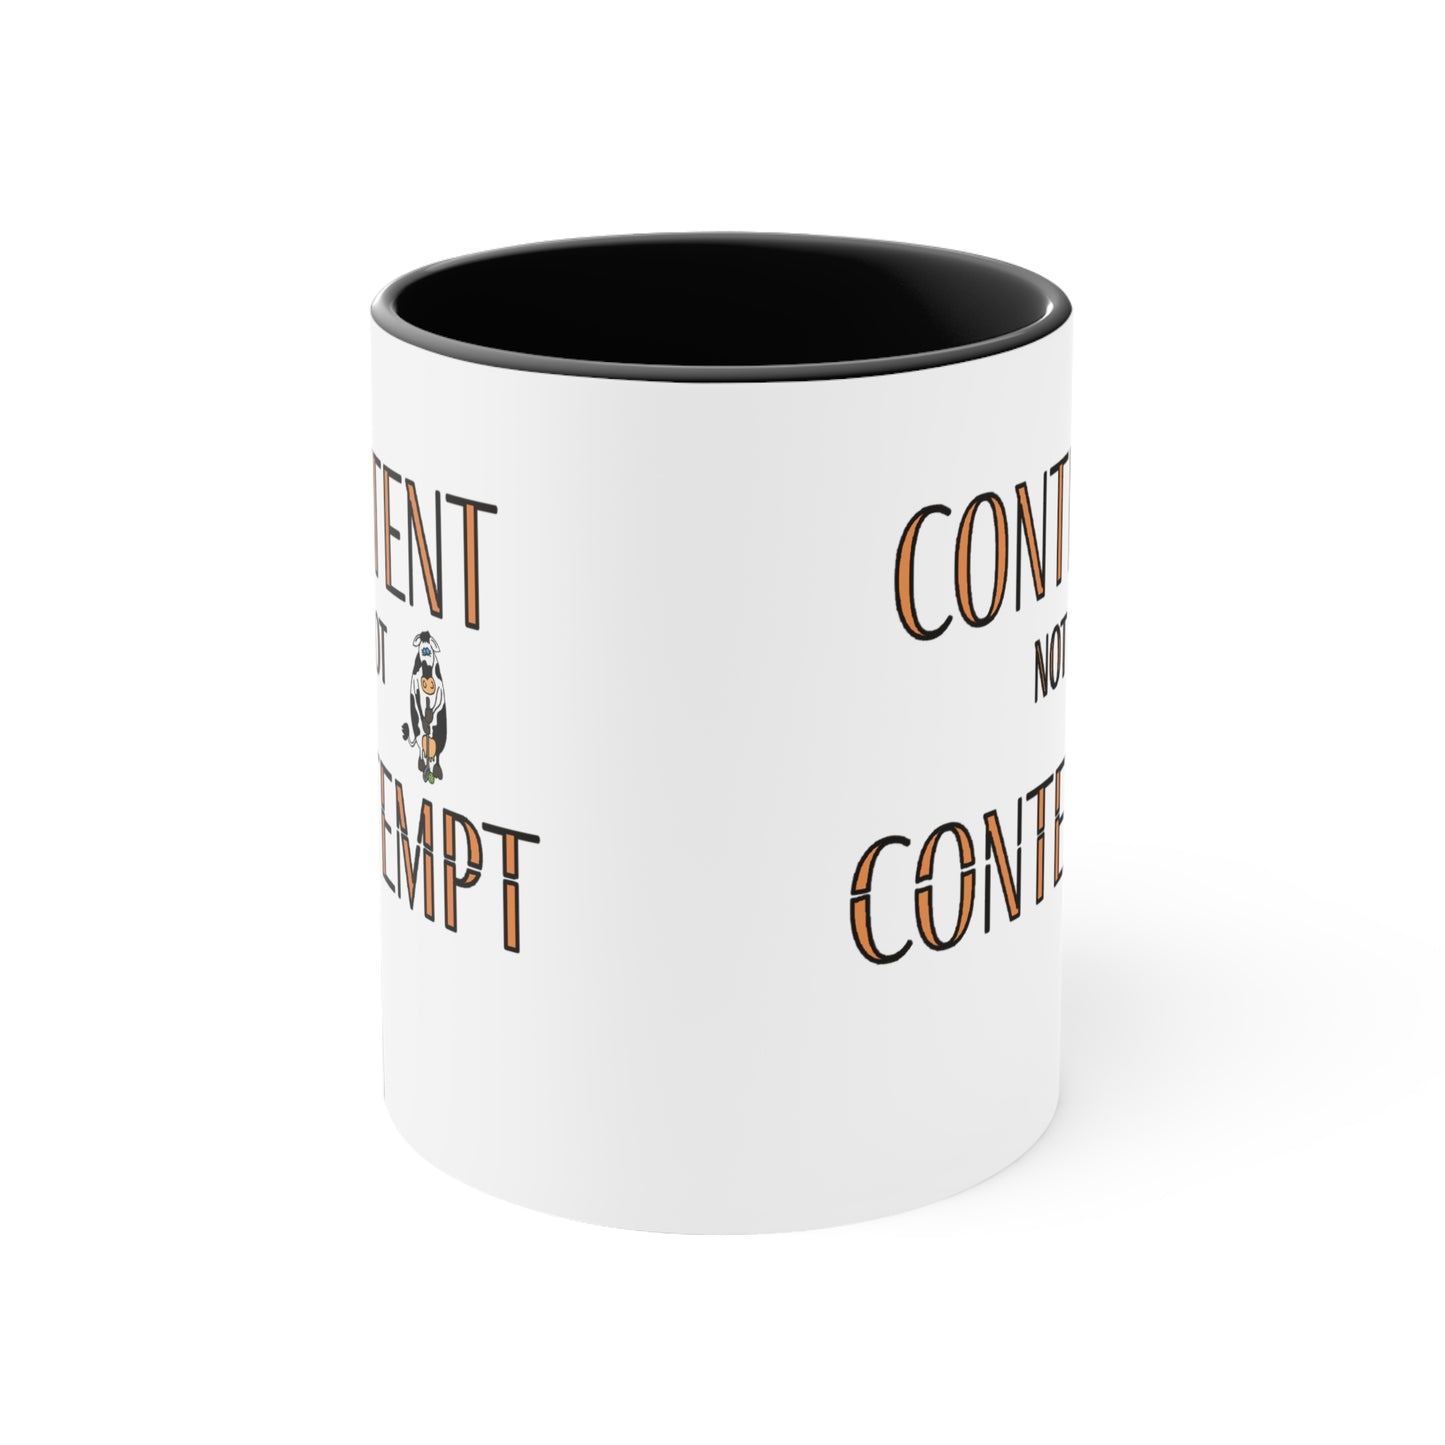 Content not Contempt Accent Coffee Mug, 11oz